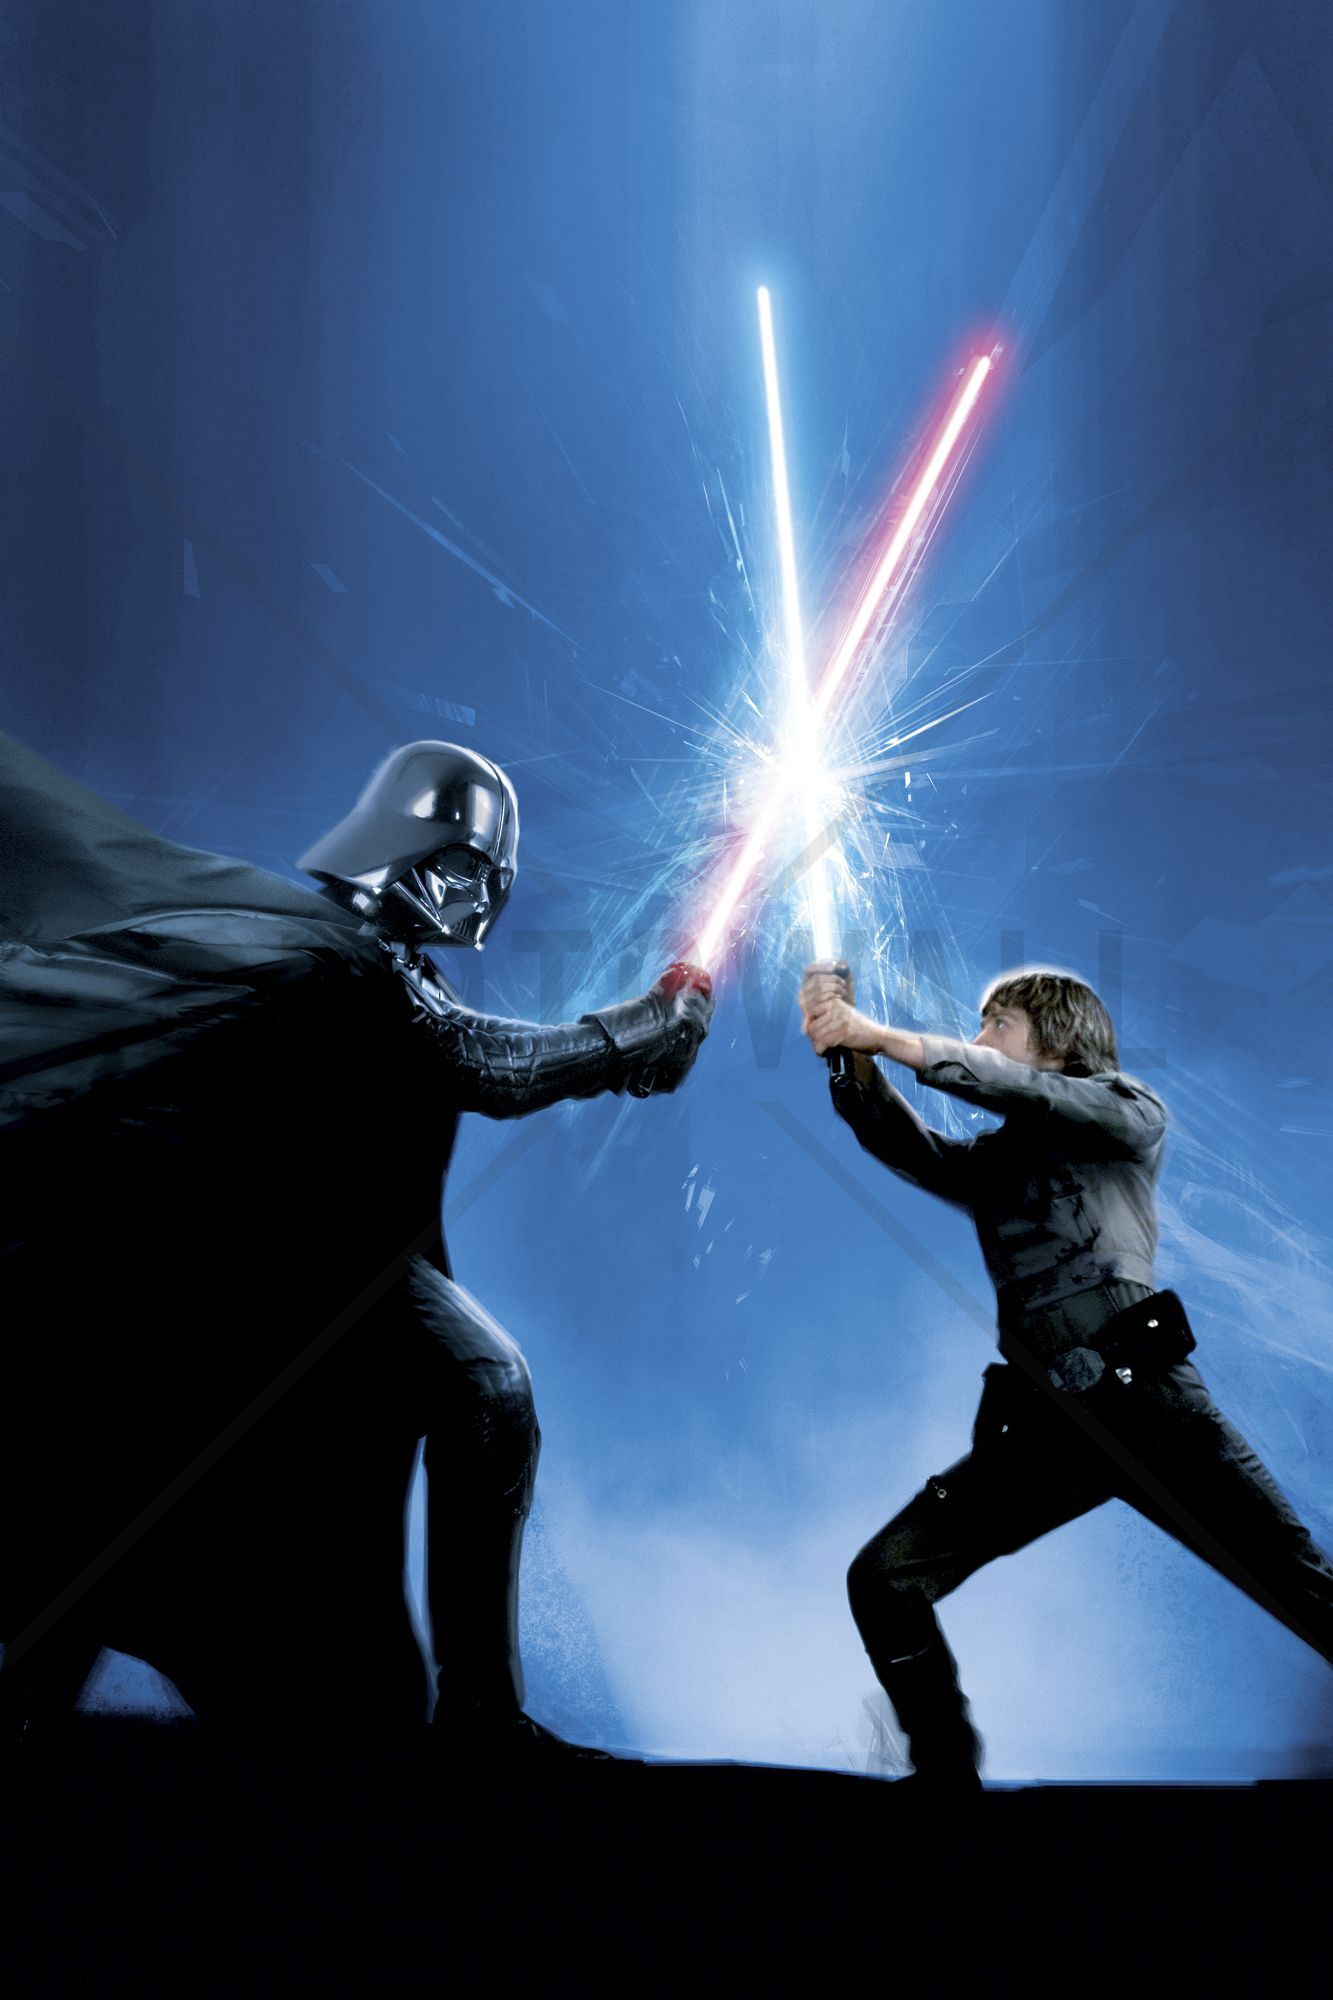 Star Wars Wallpaper Darth Vader And Luke